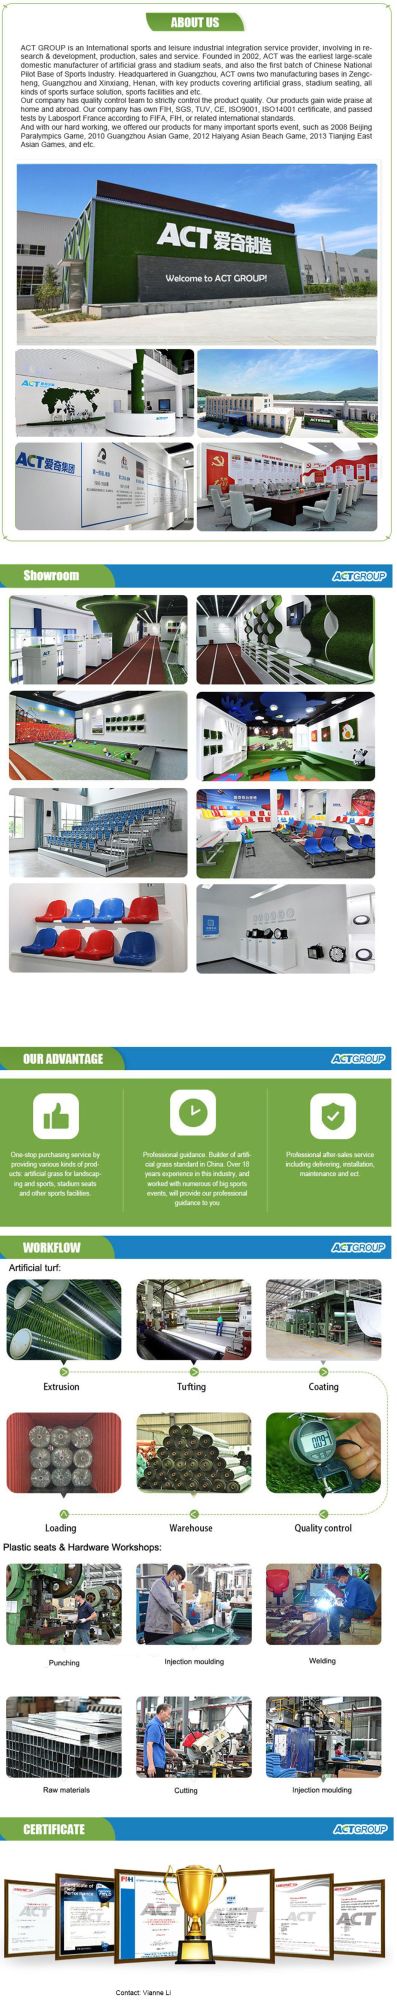 Riser Mounting HDPE Plastic Folding Chair for Soccer Stadium, VIP Seats CS-Gzy-C